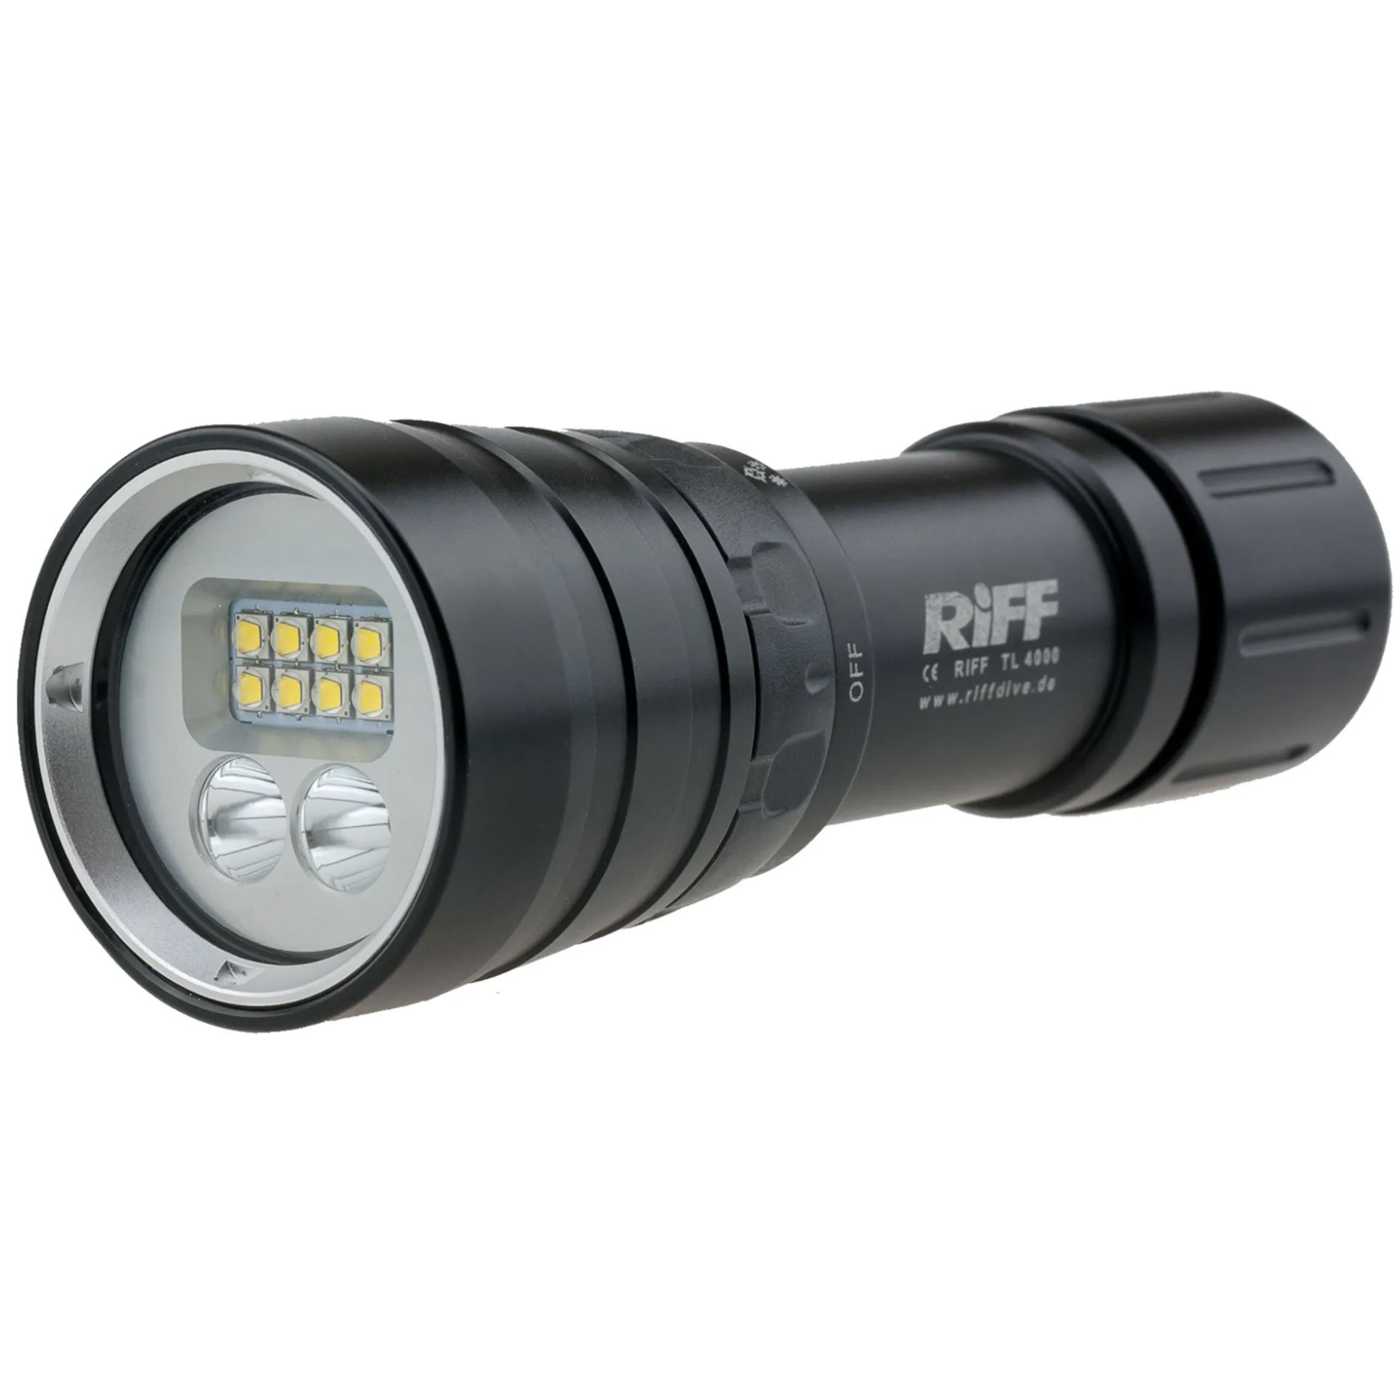 RIFF TL 4000 MK2 LED Tauch - und Videolampe